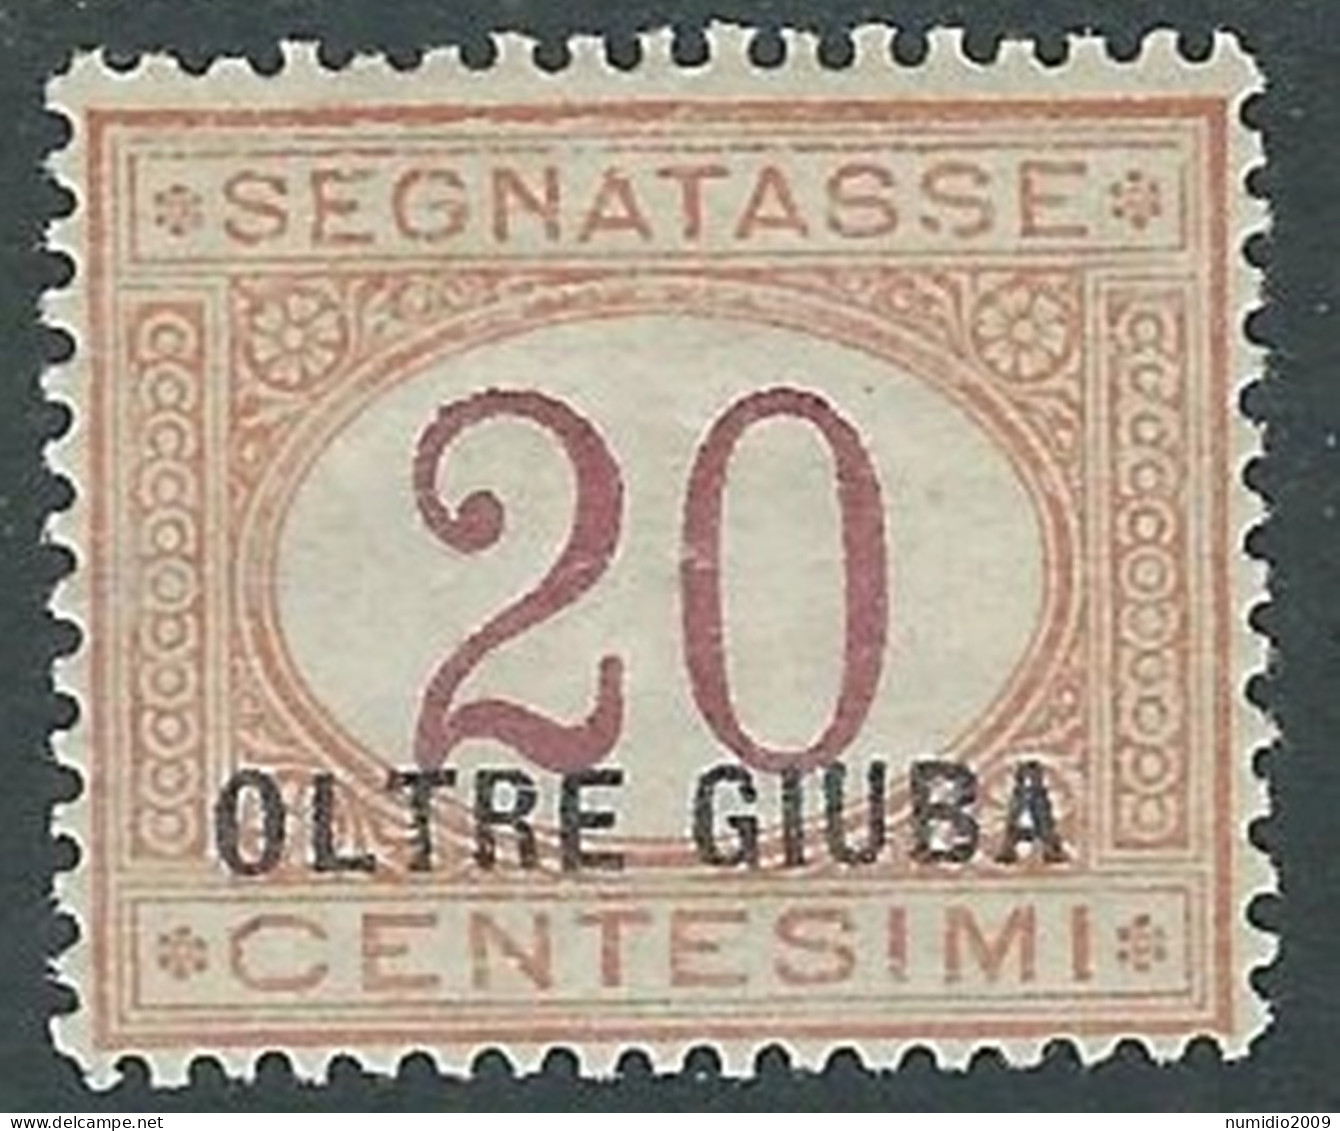 1925 OLTRE GIUBA SEGNATASSE 20 CENT MH * - I55-2 - Oltre Giuba